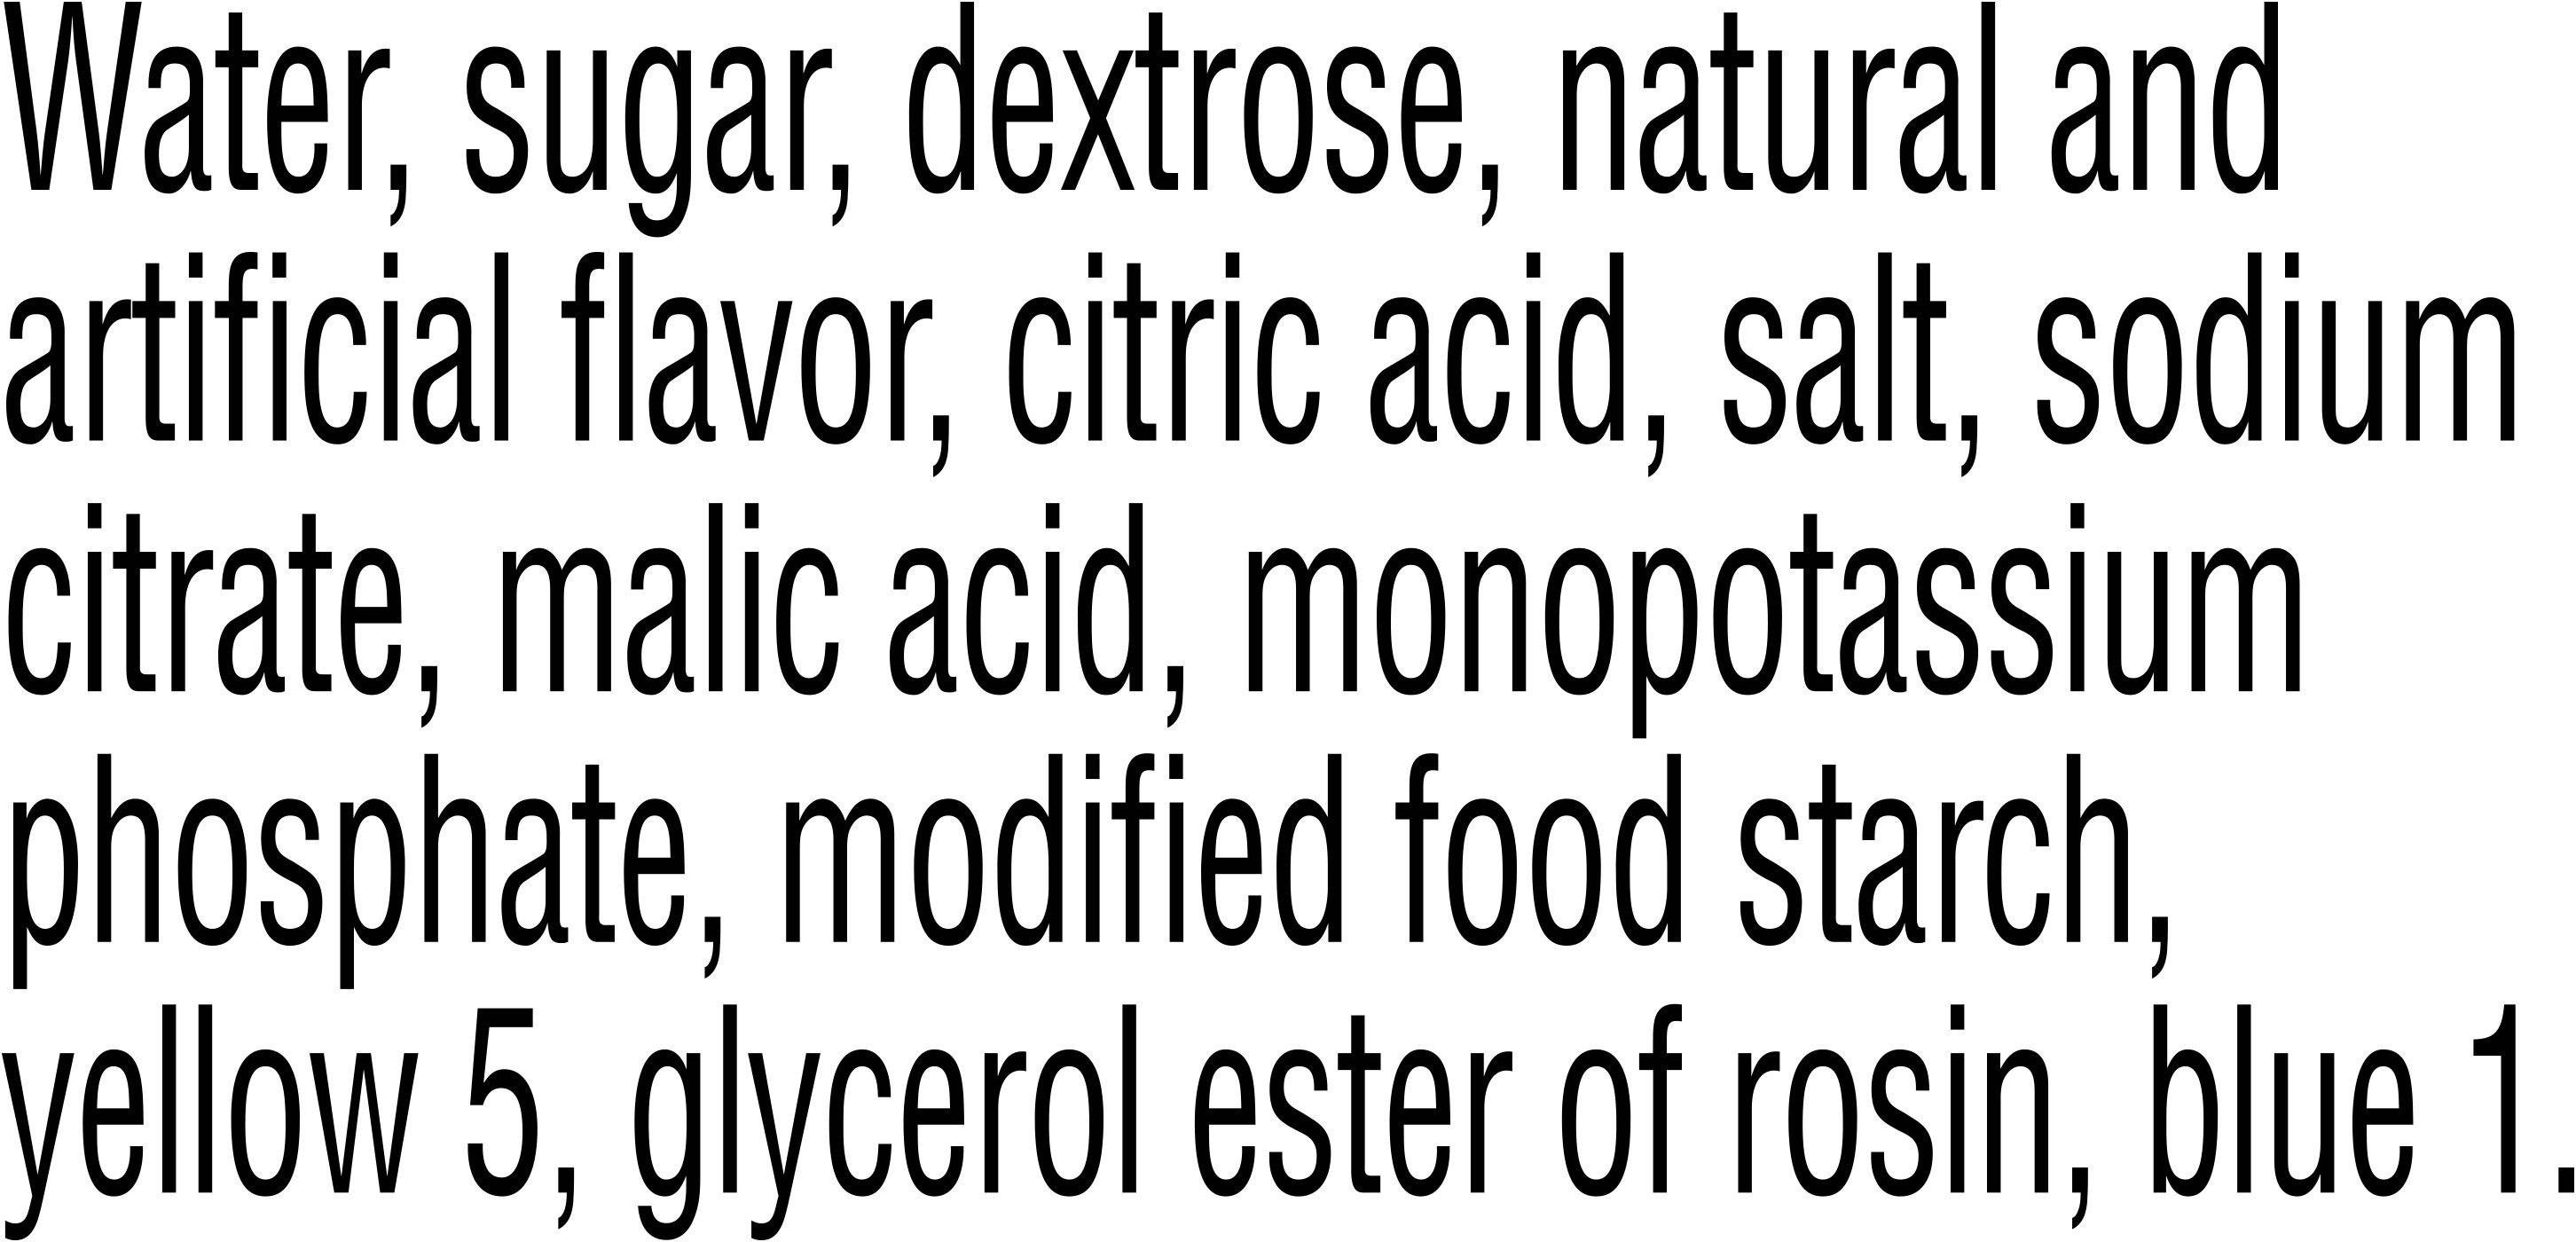 Image describing nutrition information for product Gatorade Fierce Green Apple